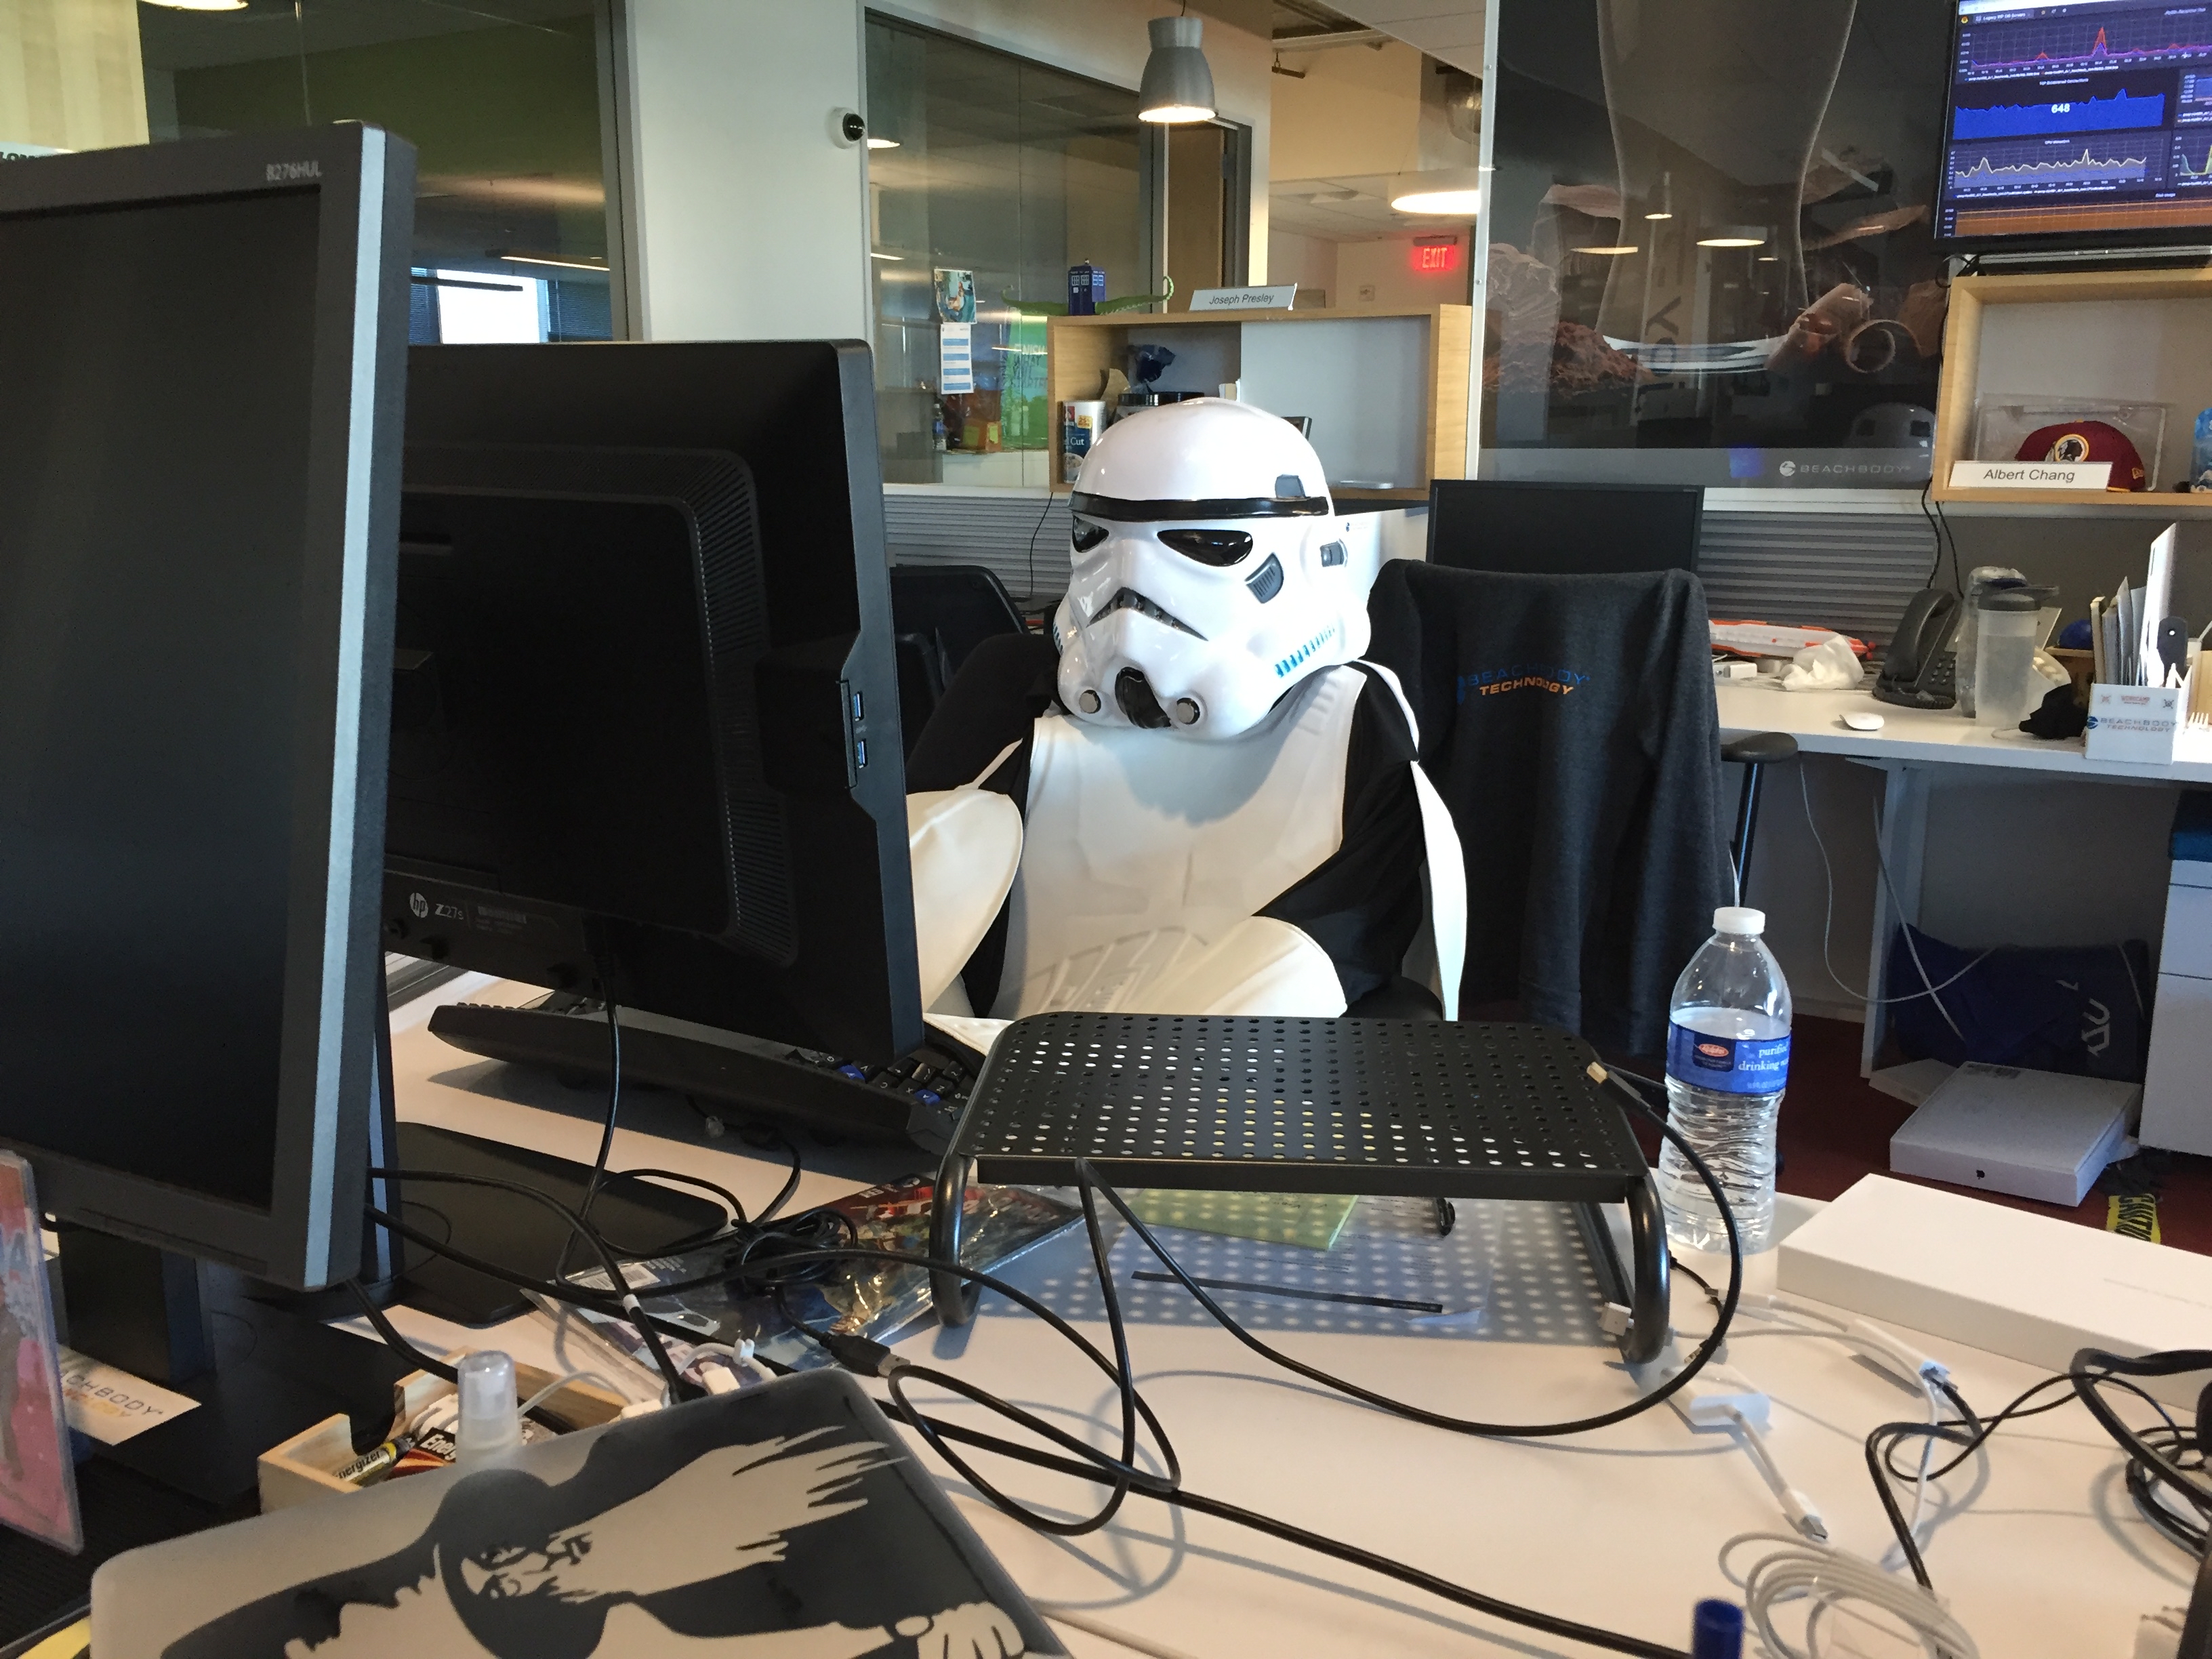 Stormtrooper "Developer" at Beachbody Technology